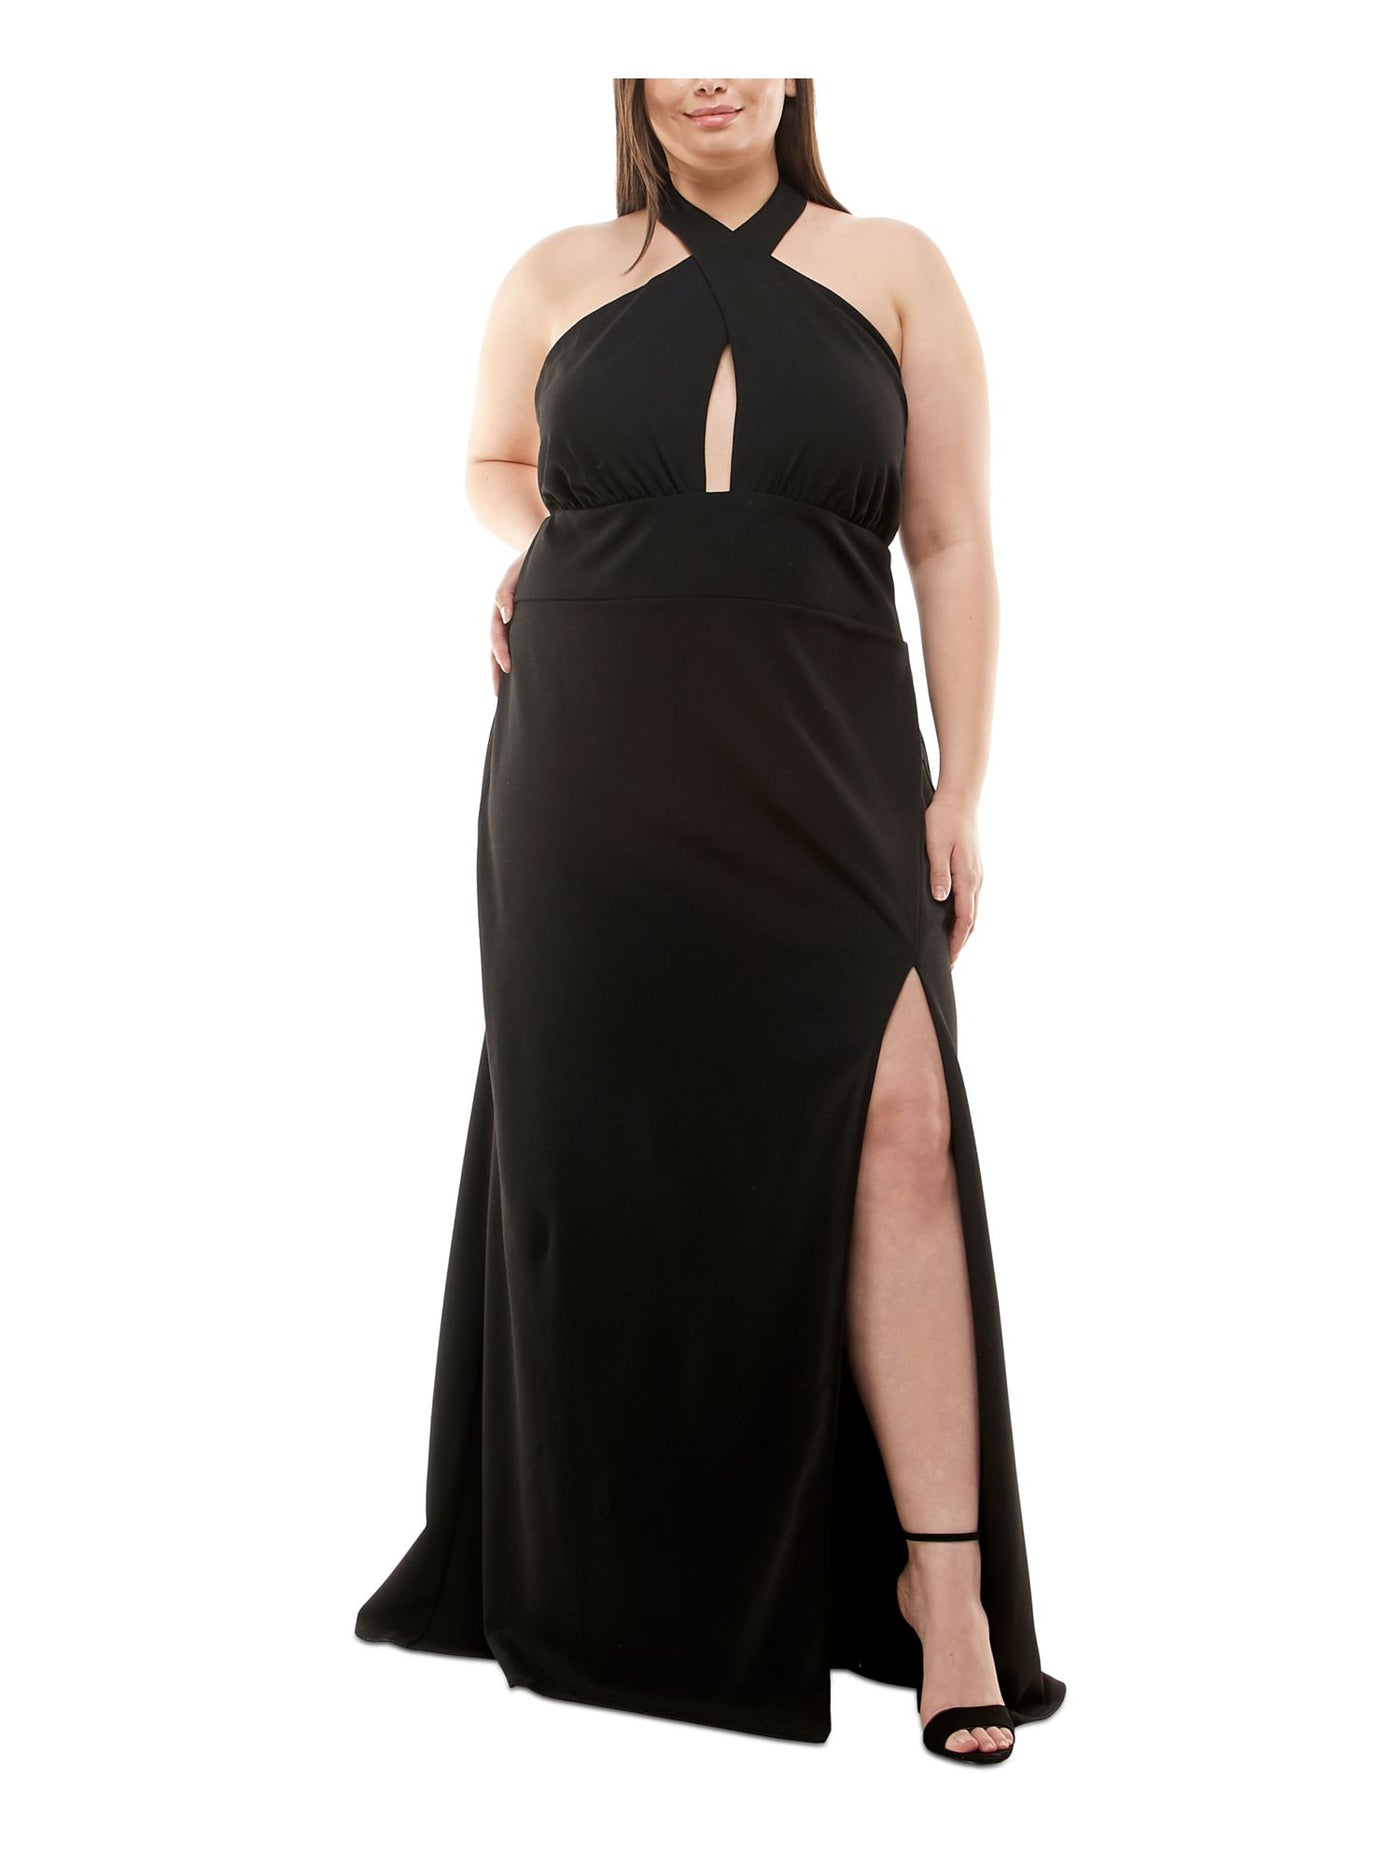 SPEECHLESS Womens Black Stretch Slitted Zippered Cutout Sleeveless Halter Full-Length Formal Gown Dress Plus 14W